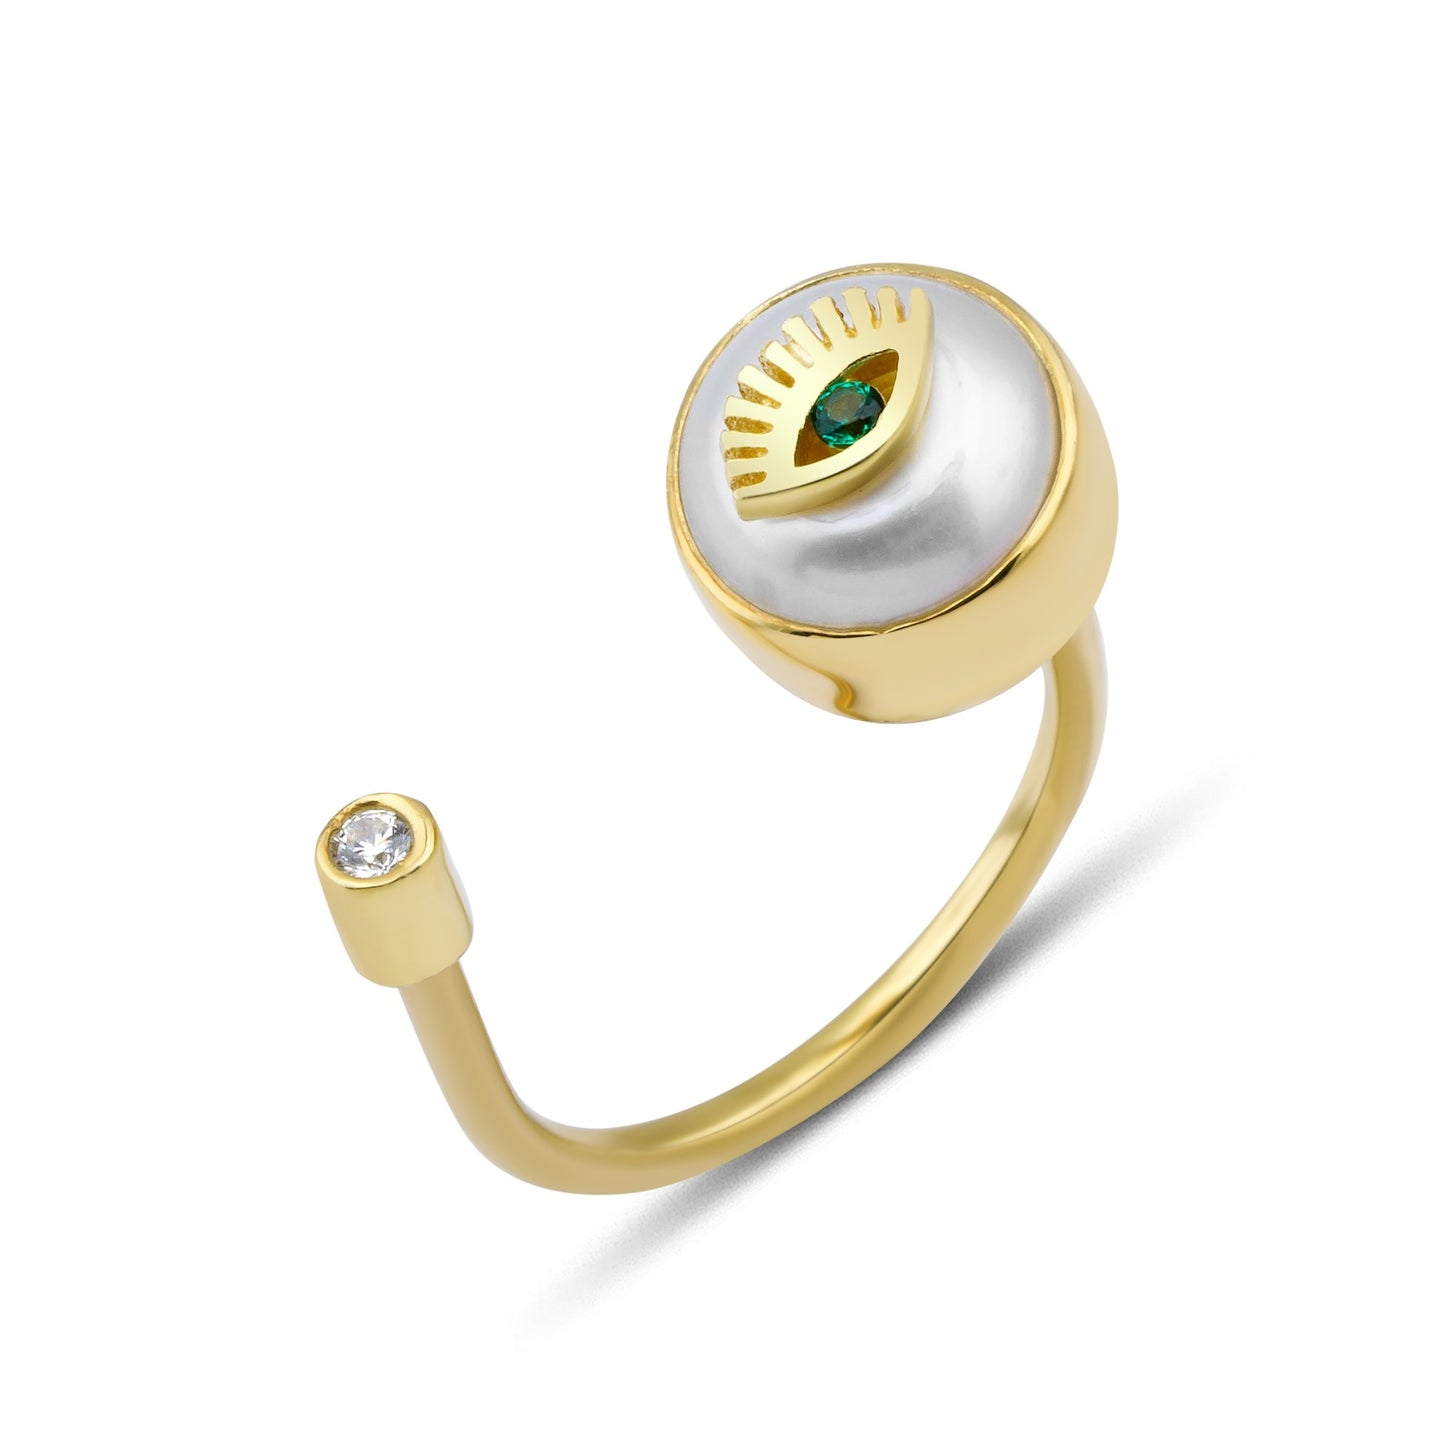 Adjustable Silver Ring with Eyelash Eye Figure